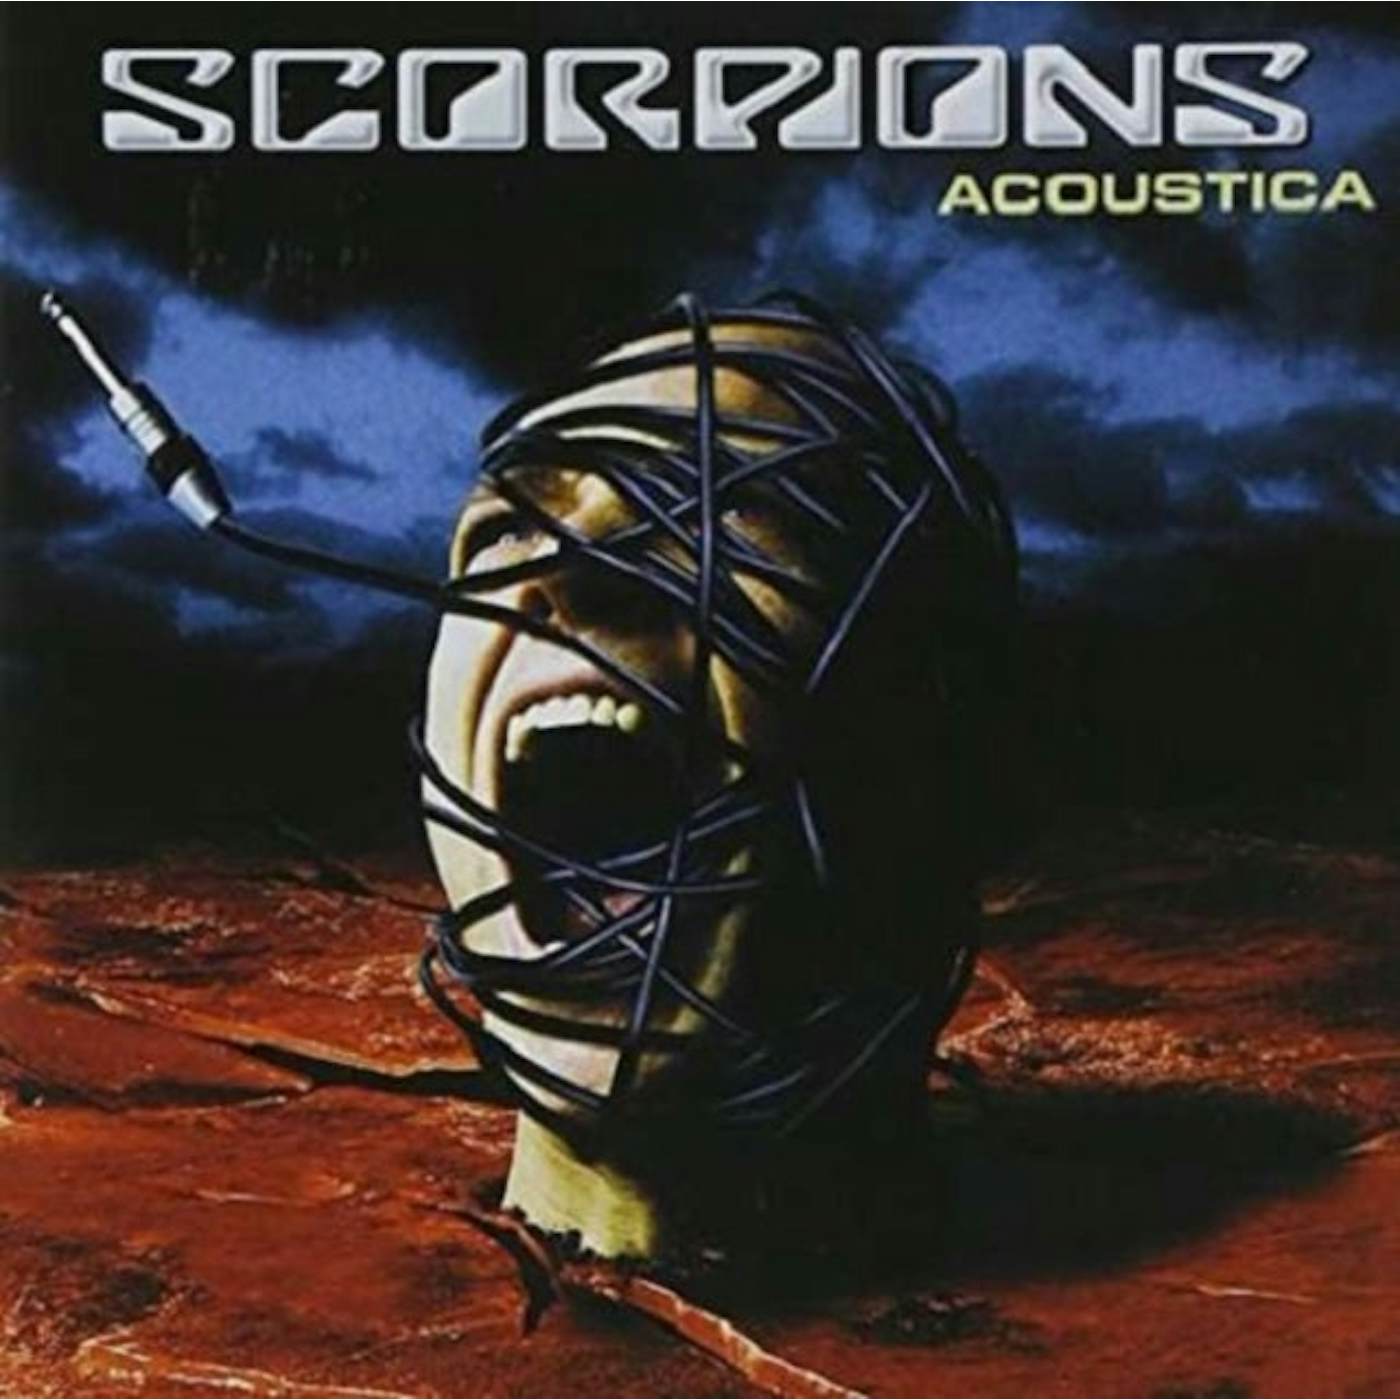 Scorpions LP Vinyl Record - Acoustica